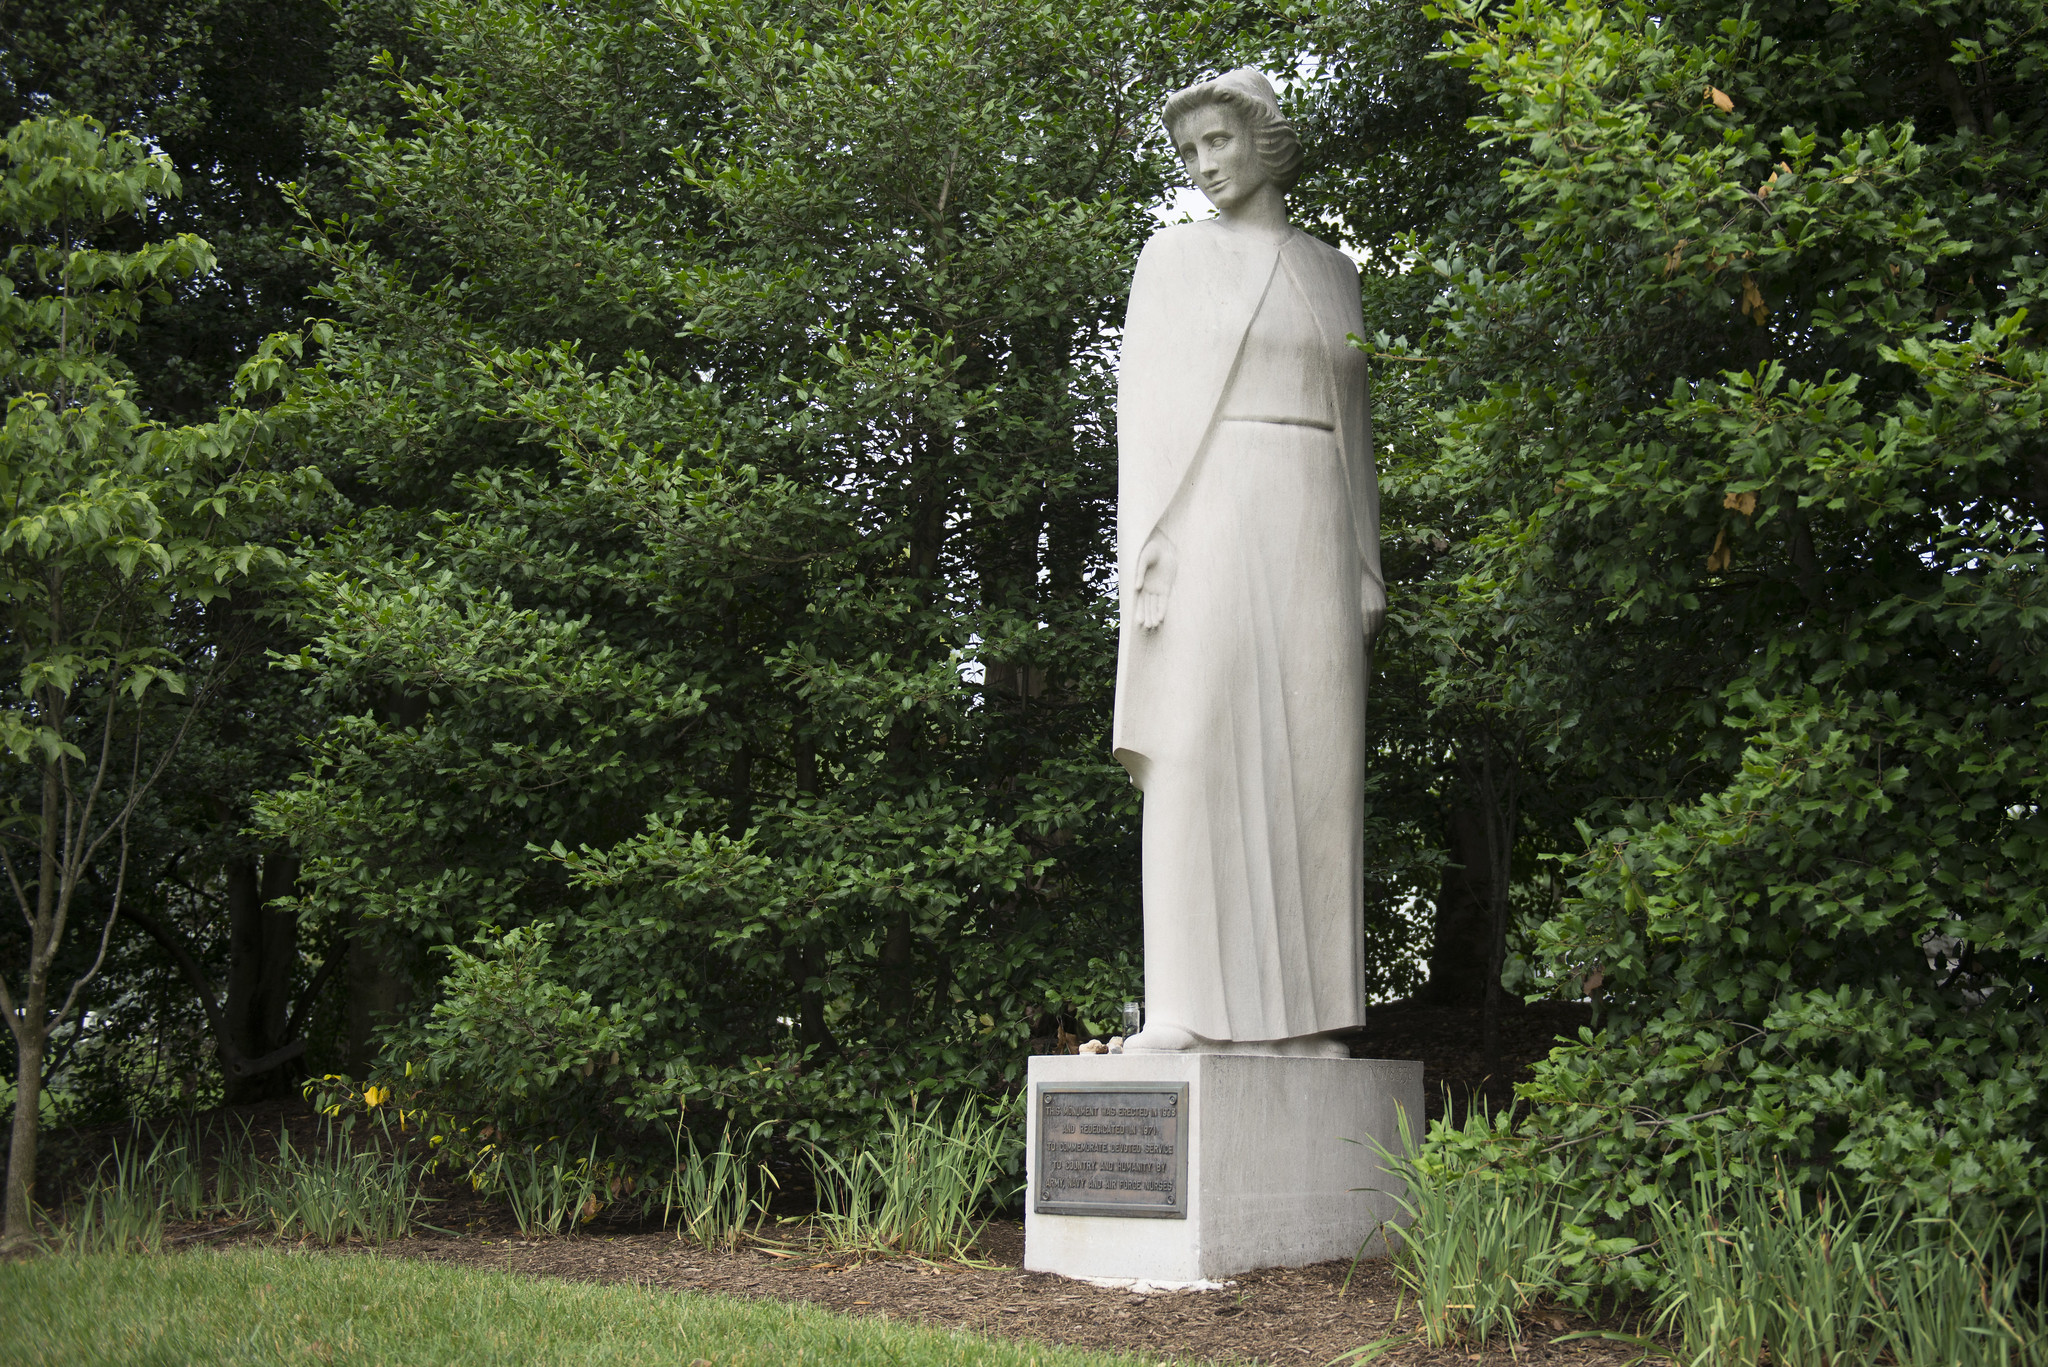 The Nurses Memorial, created by sculptor Frances Rich